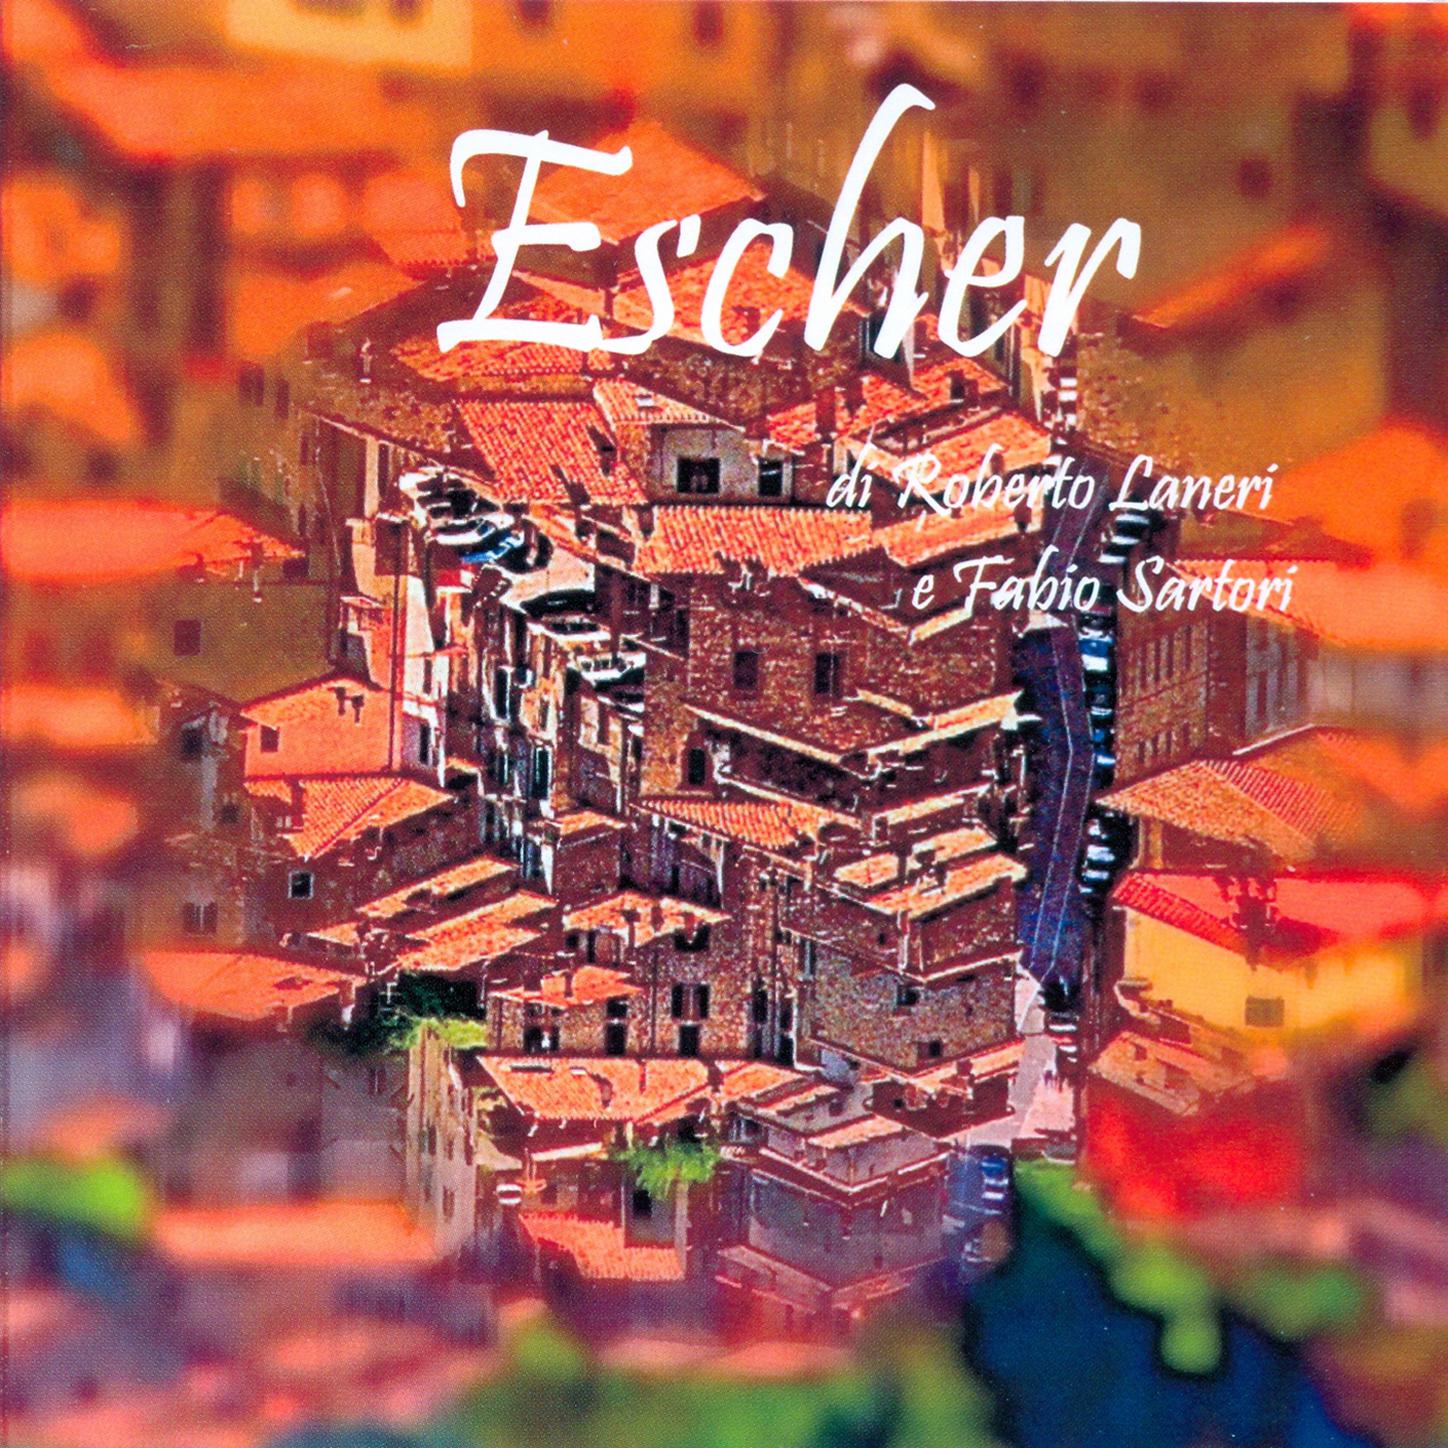 Roberto Laneri - Escher